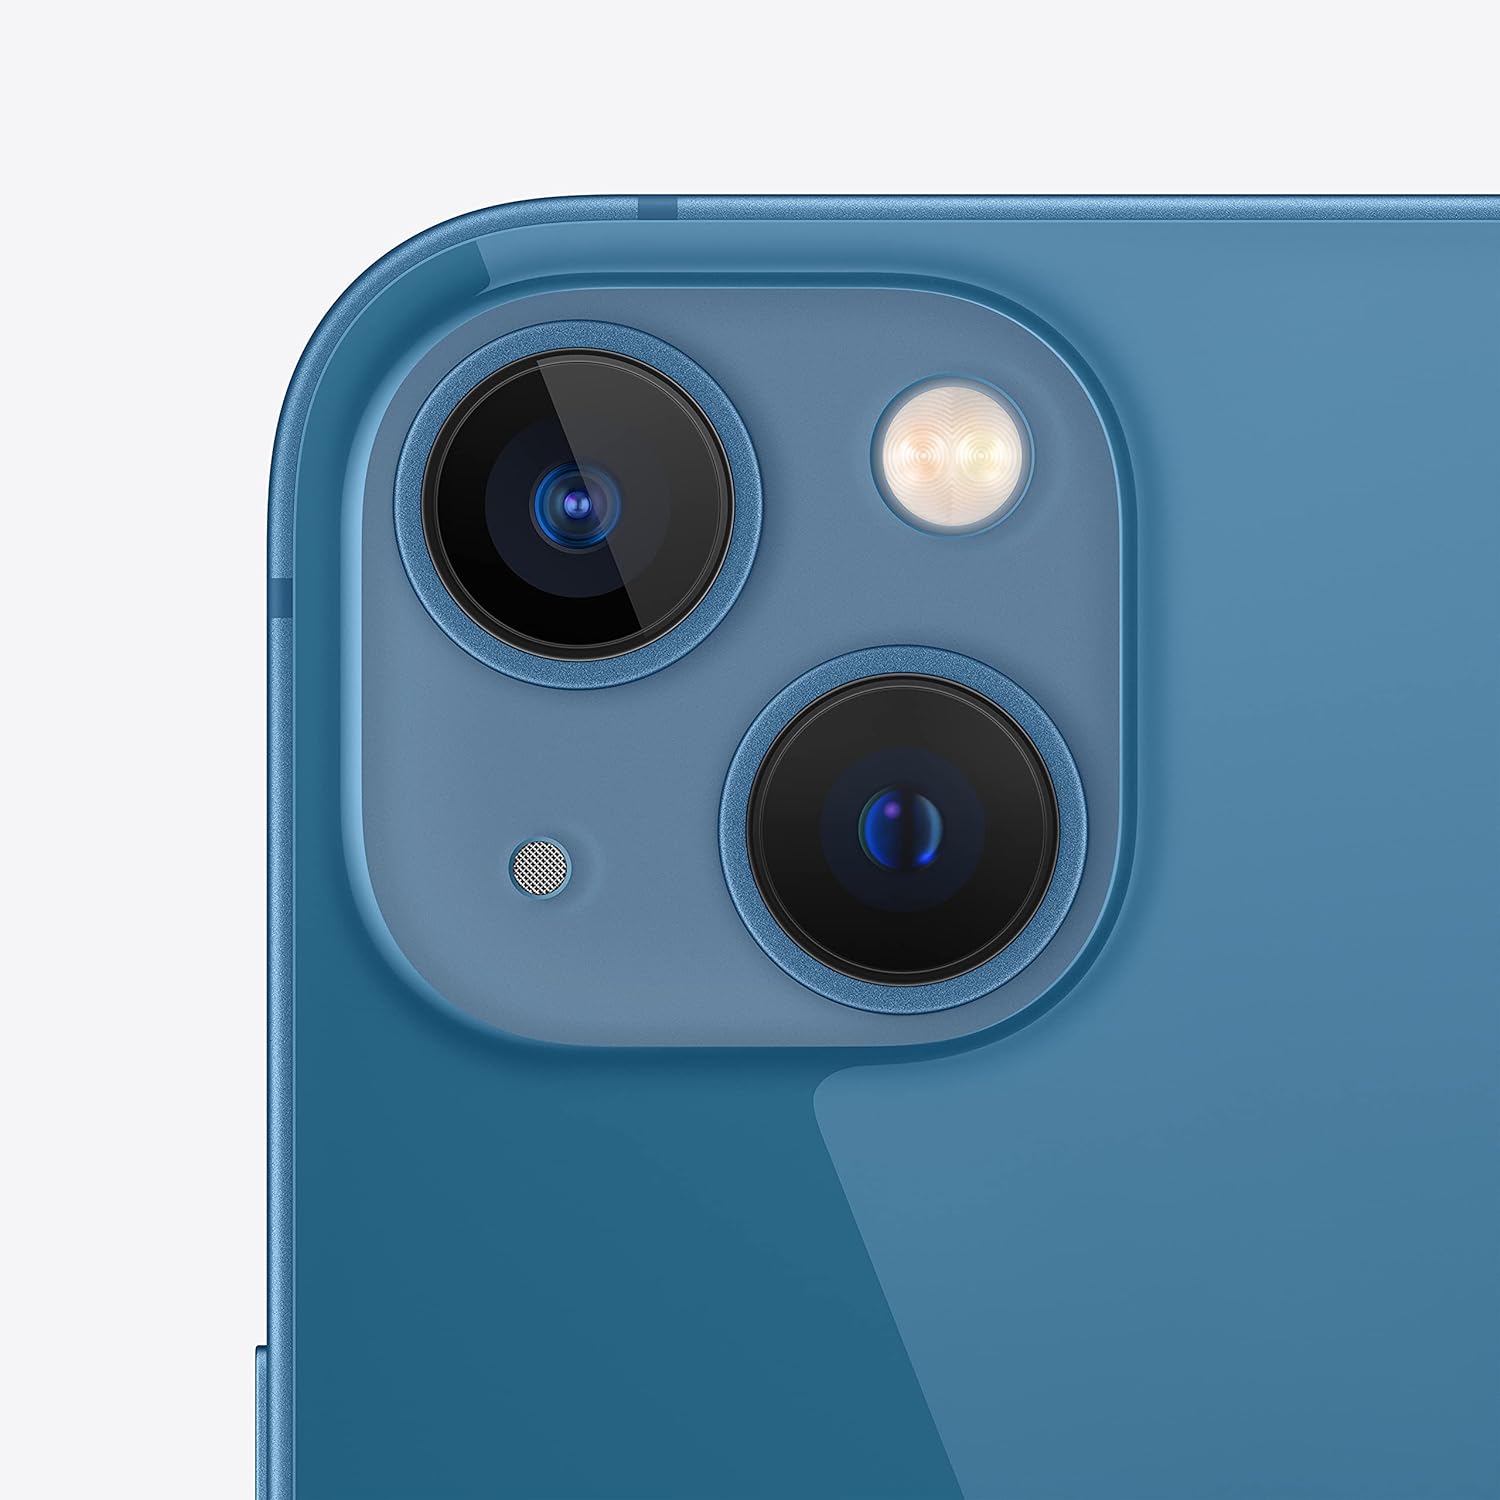 Apple iPhone 13 Mini 256GB (Unlocked) - Blue (Certified Refurbished)